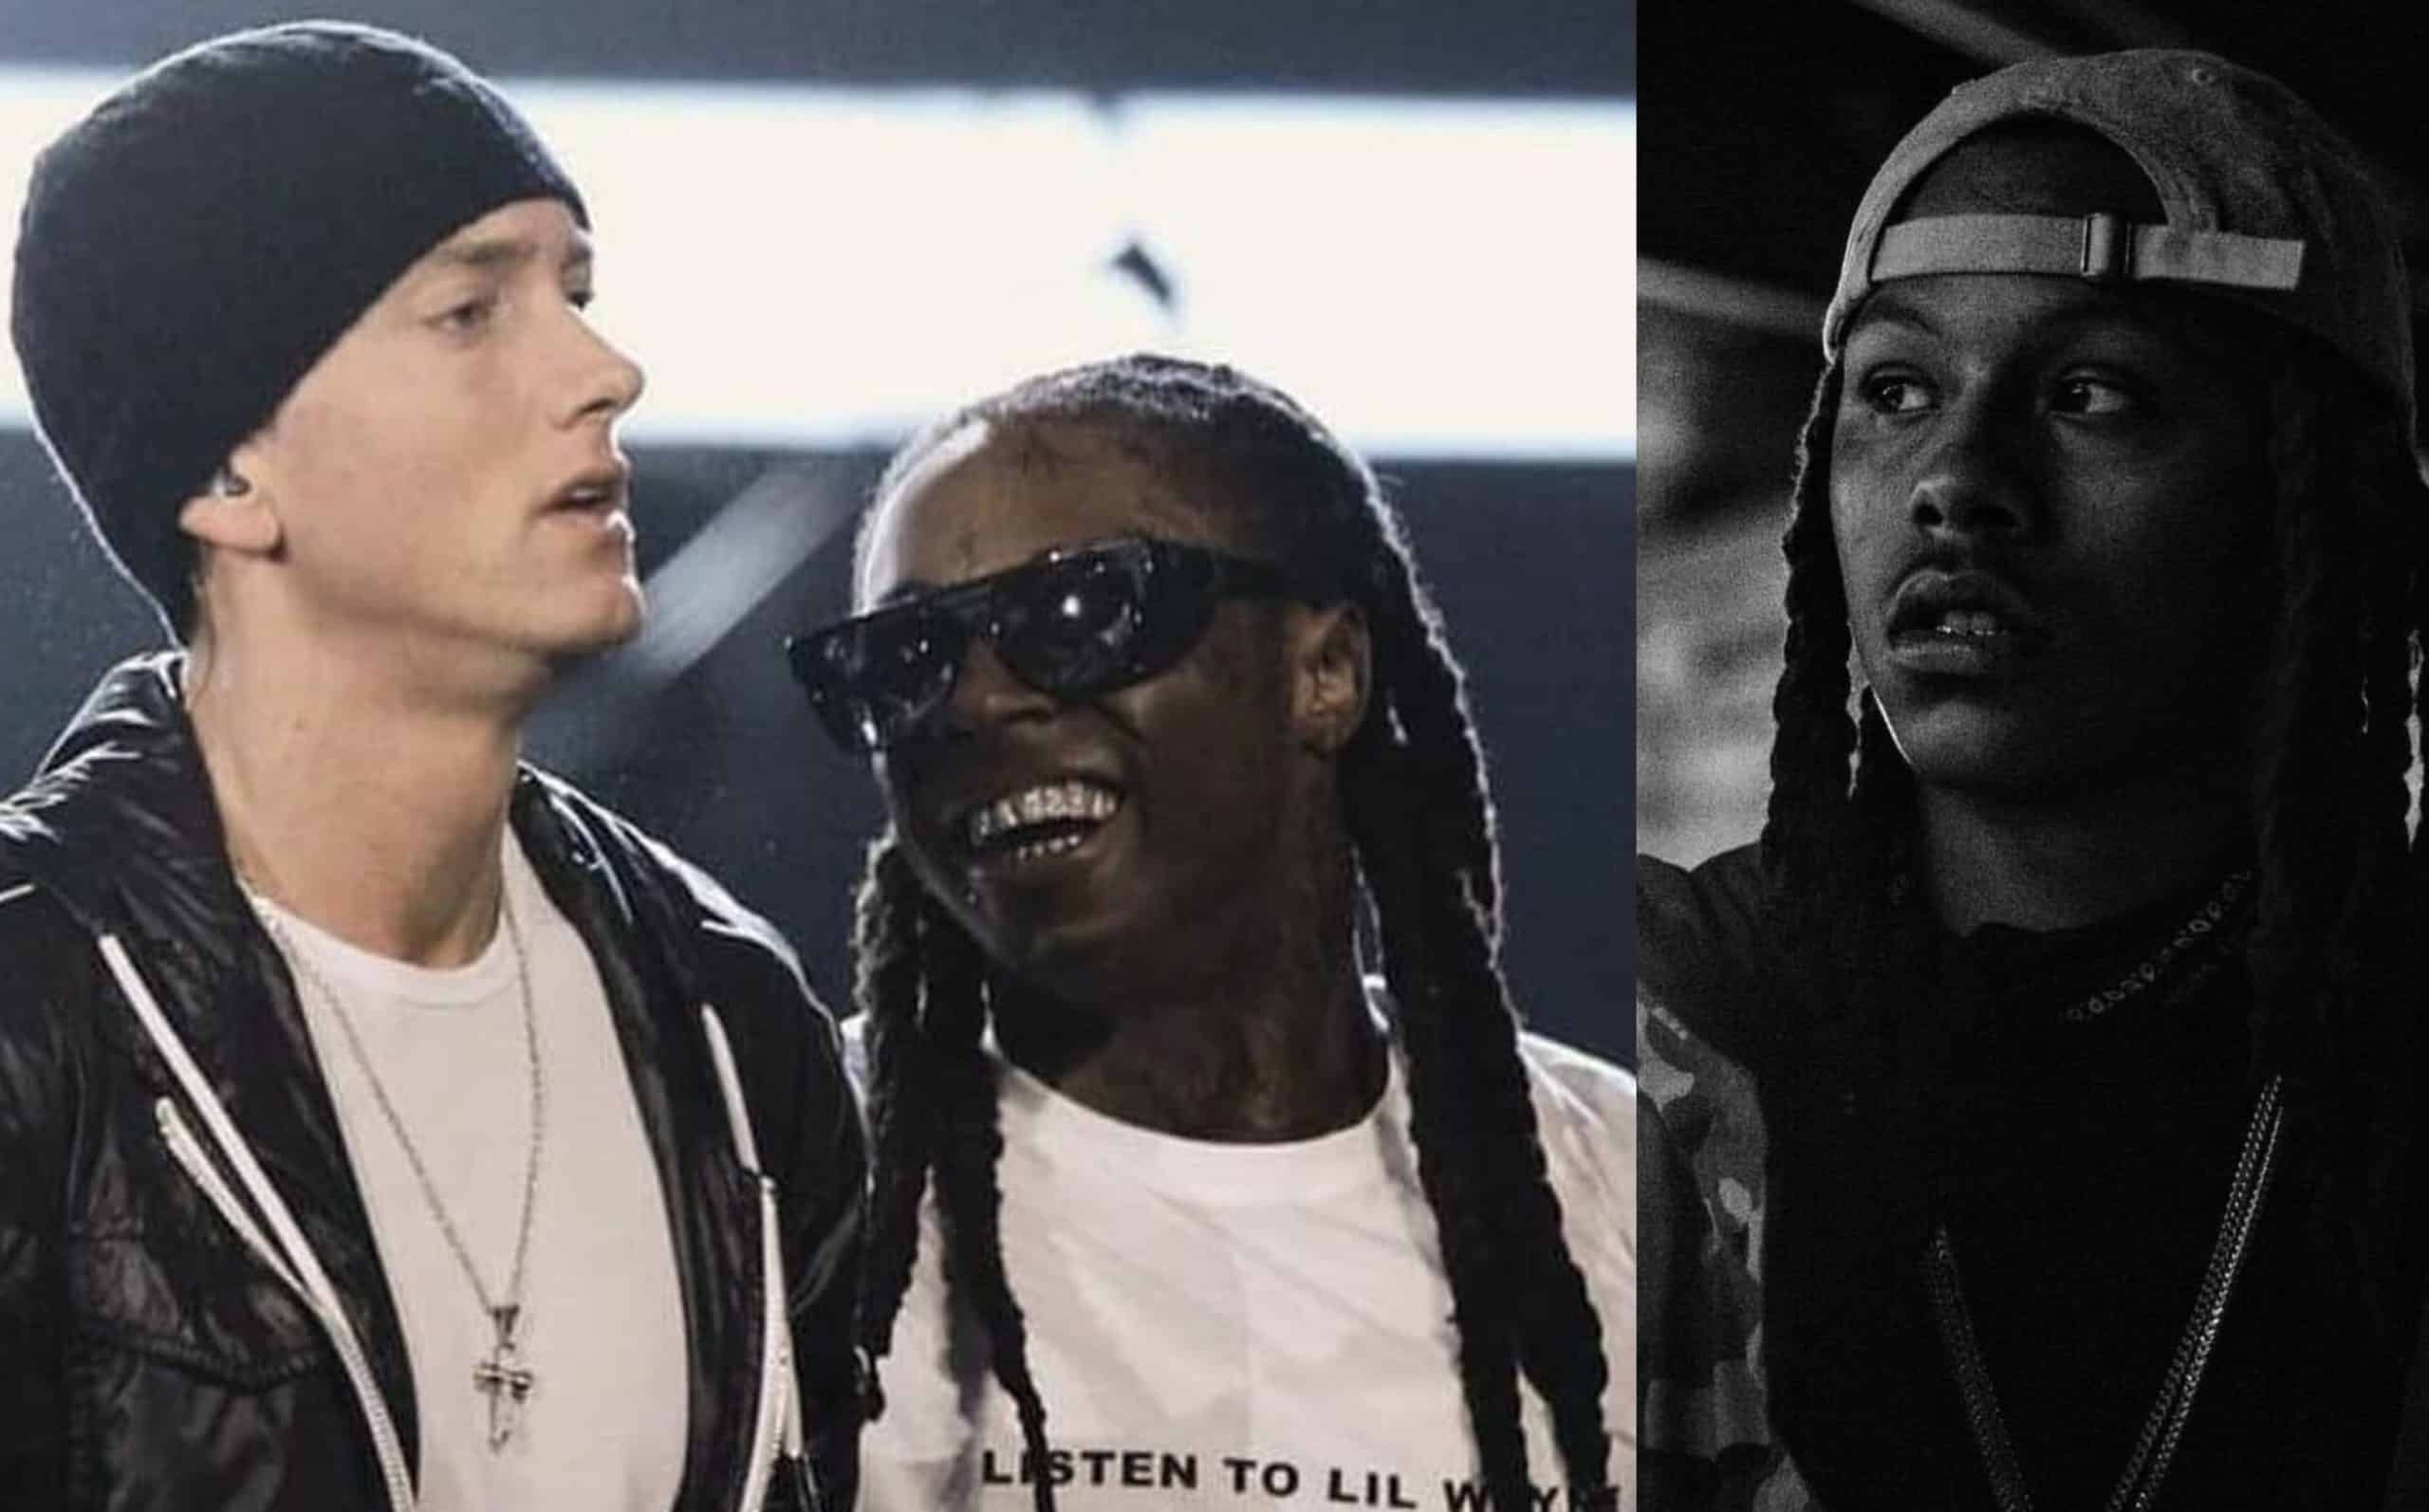 Mike Zombie Names Eminem & Lil Wayne As His Favorite Artists